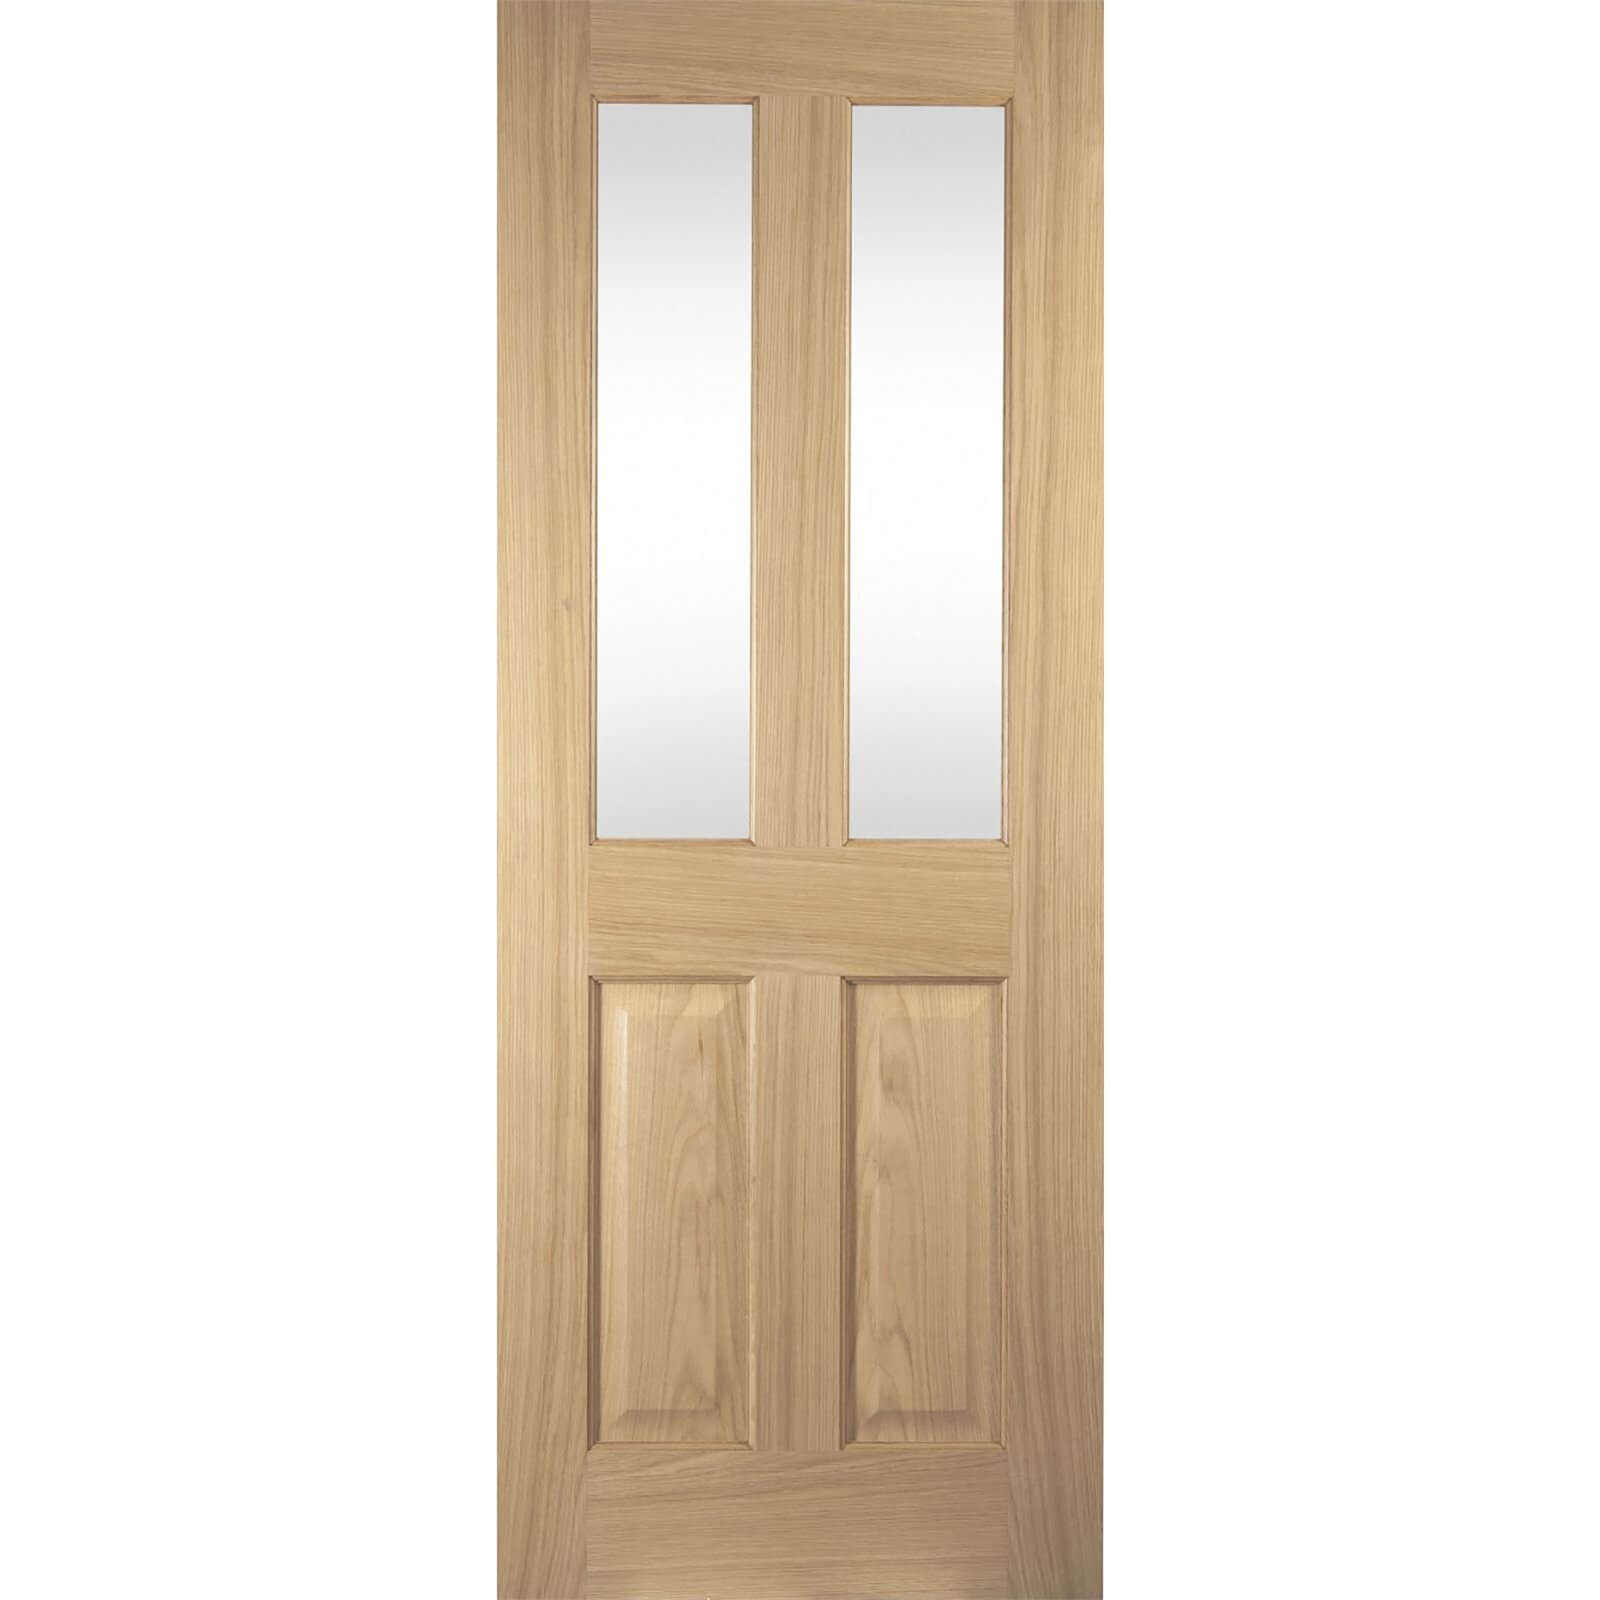 Photo of 2 Lite Clear Glazed Oak Veneer Internal Door - 838mm Wide